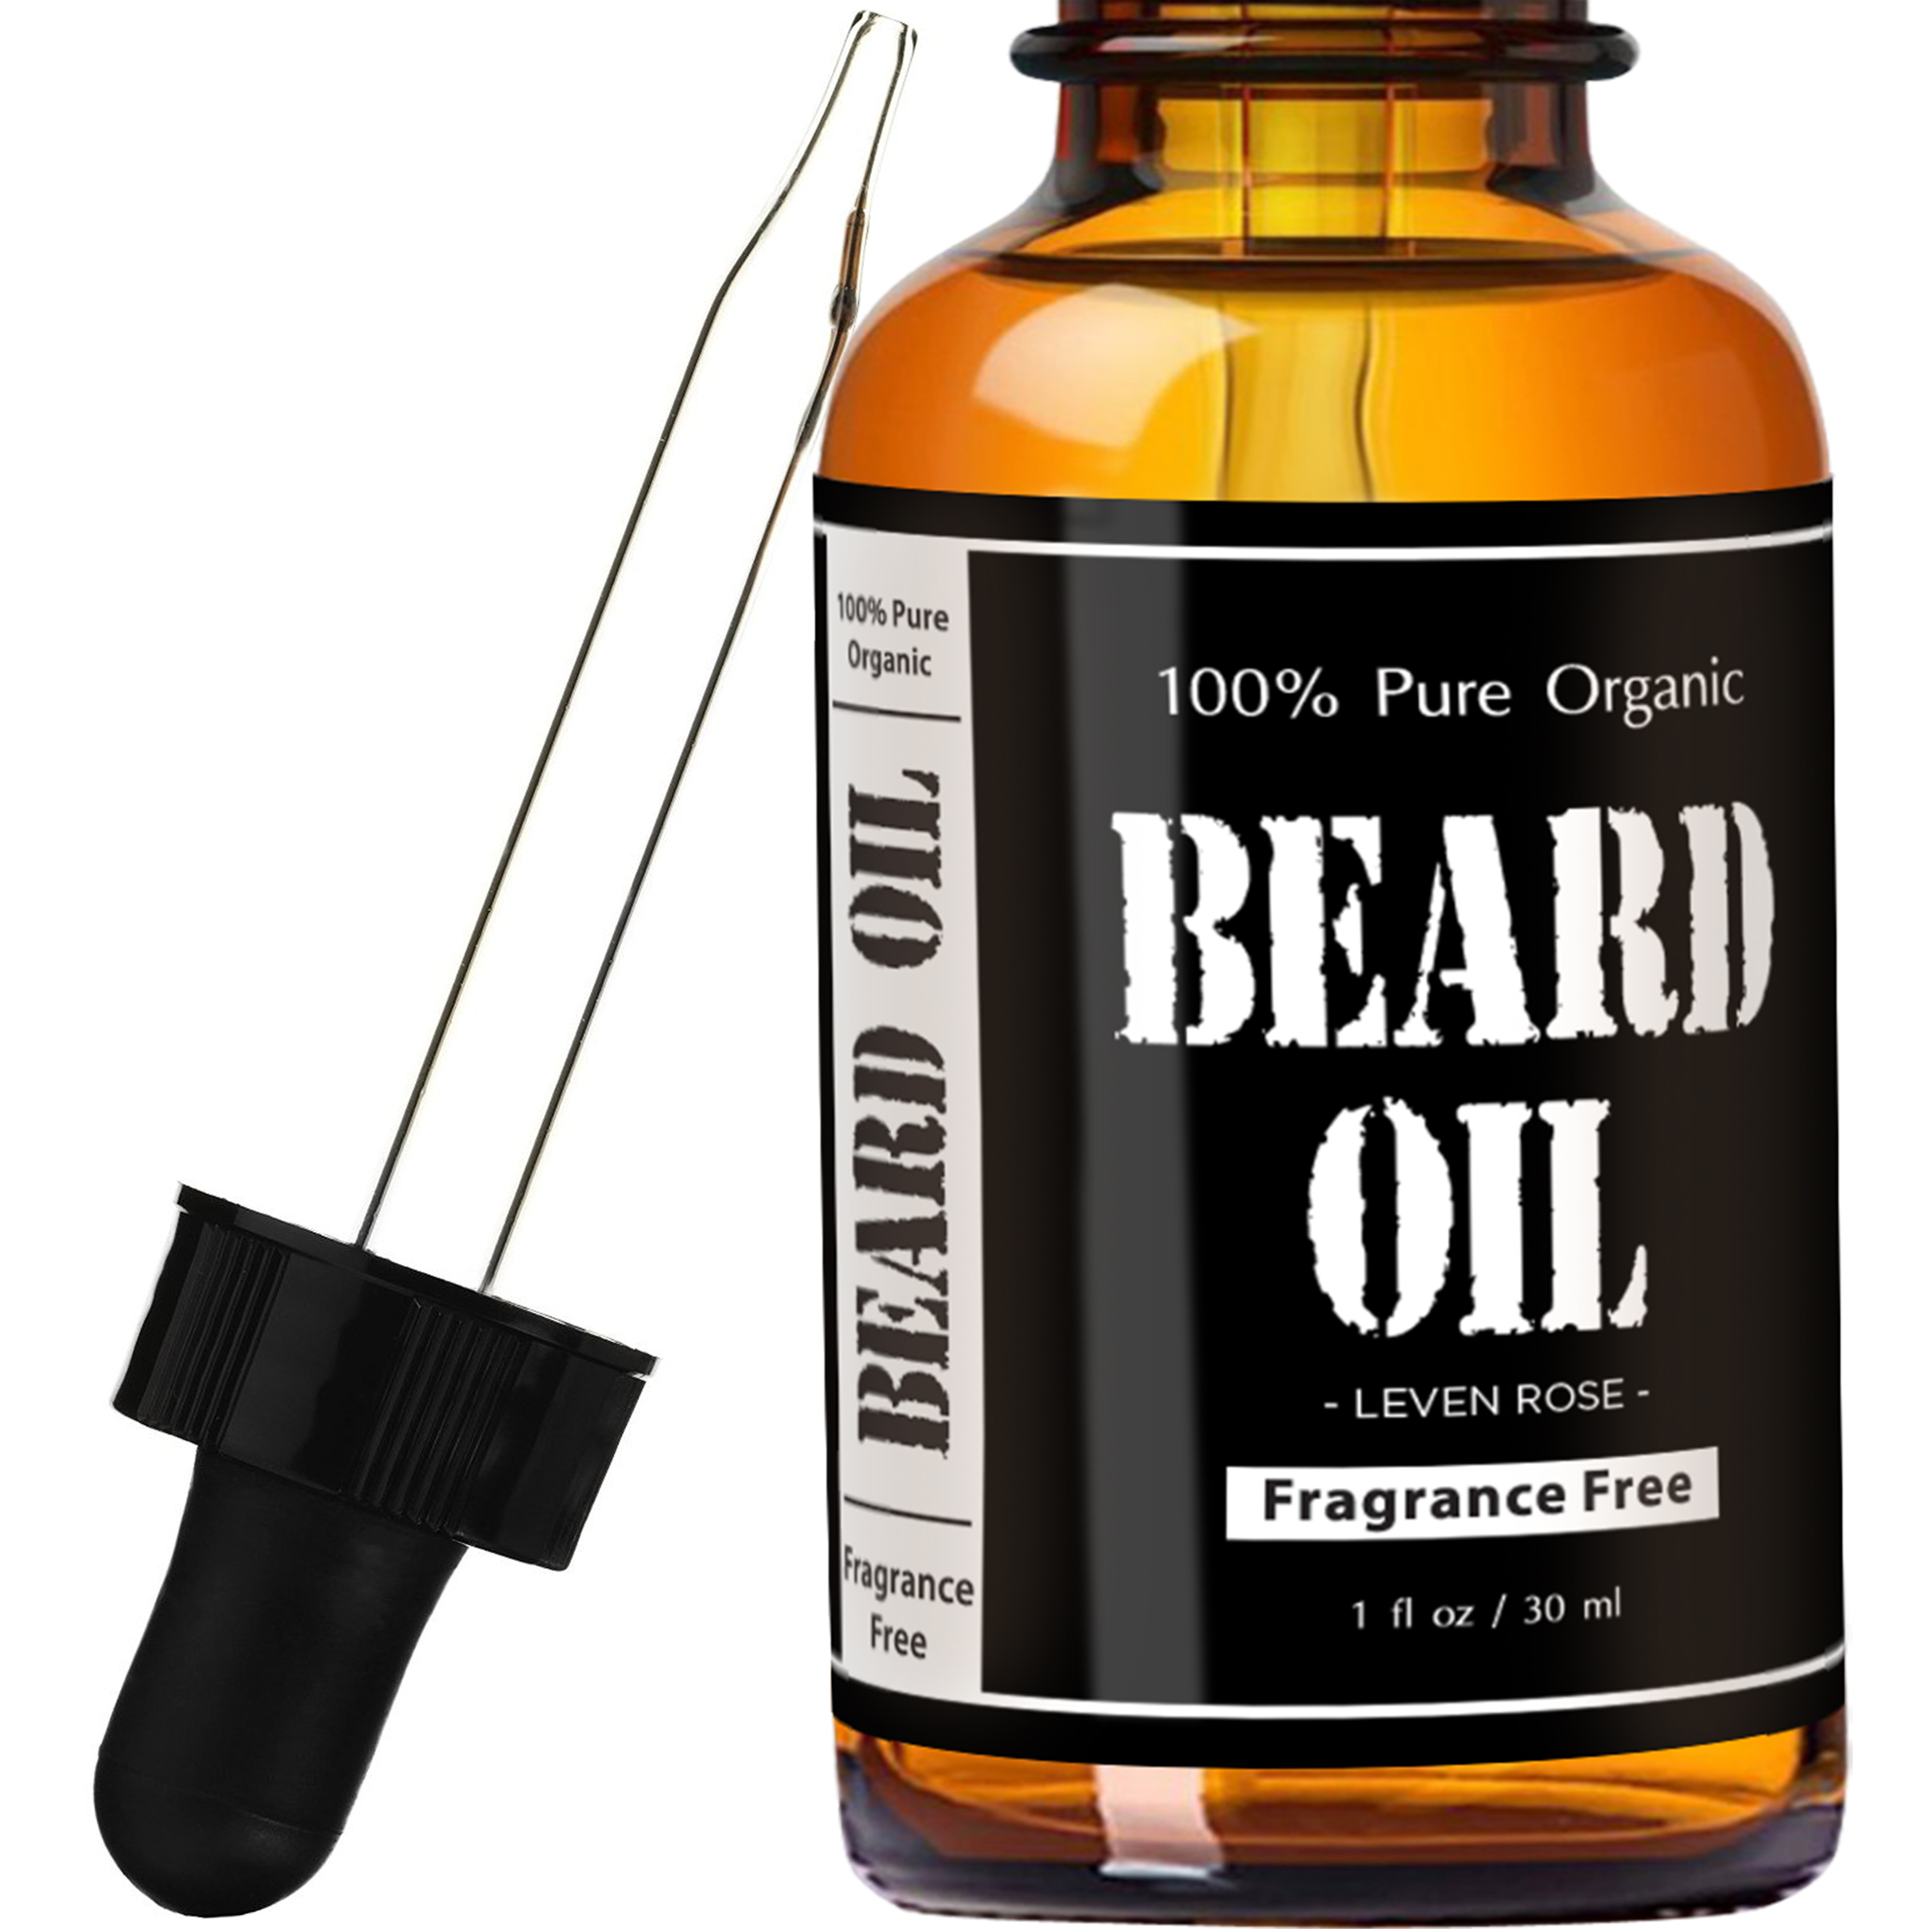 Leven Rose Beard oil, Fragrance Free, 100% Pure, organic ingredients, 1 fl oz - image 1 of 7